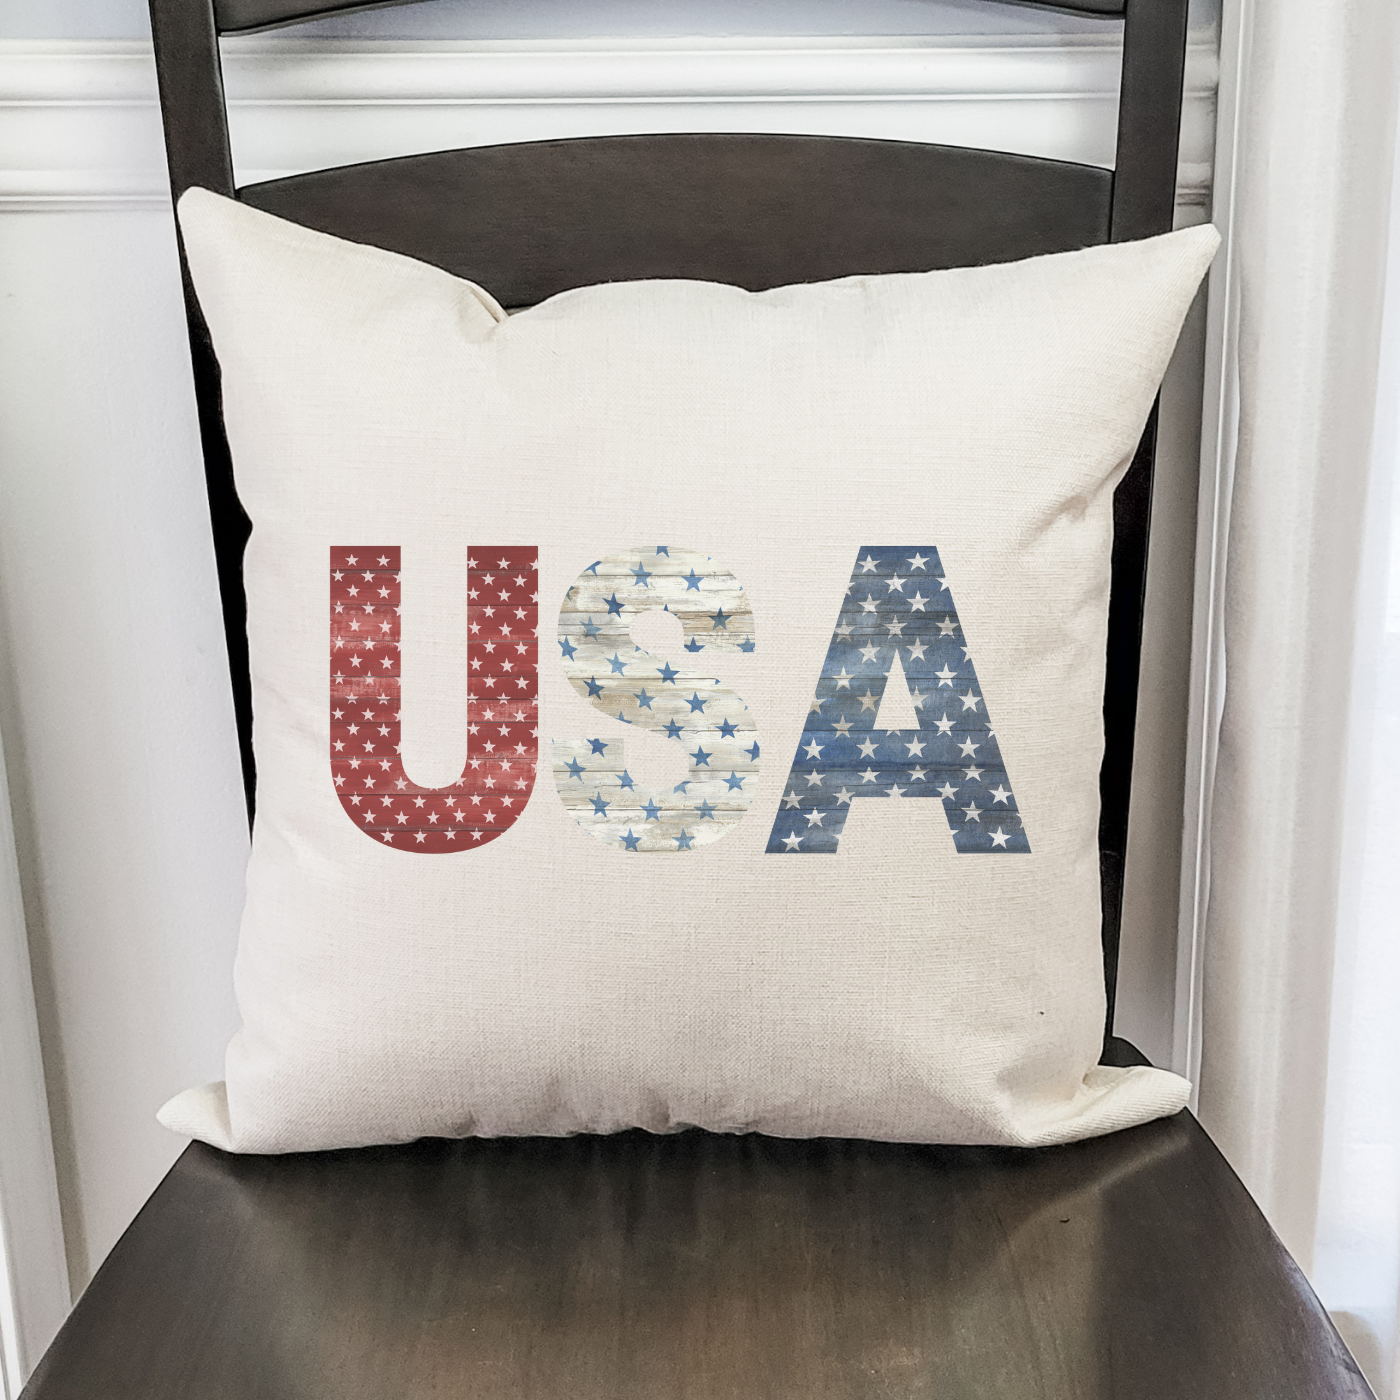 USA Pillow Cover